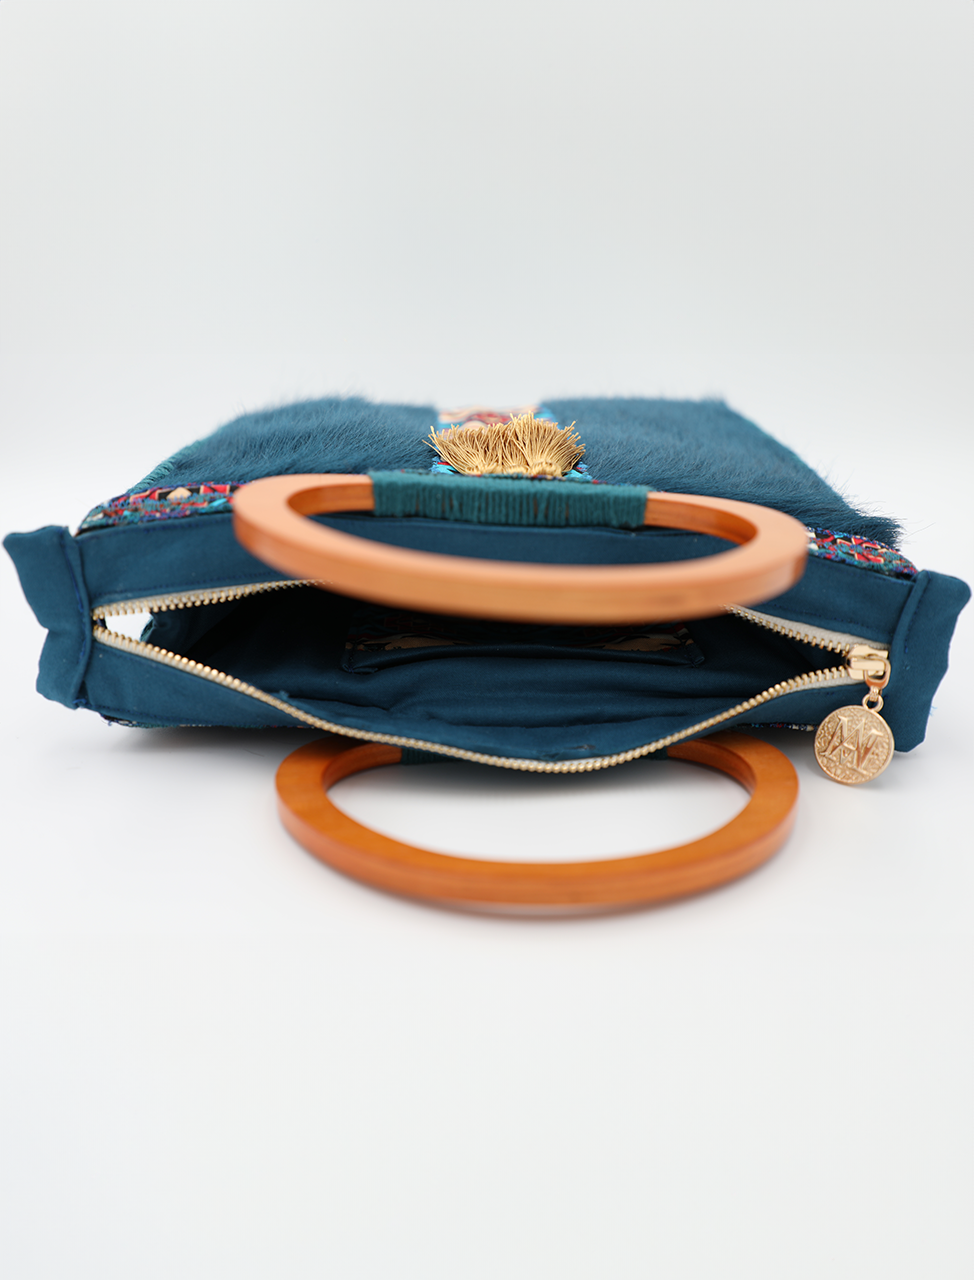 Chic Western Elegance: Teal Blue Handcrafted Handbags by Meryarts with Stylish Zipper Detail